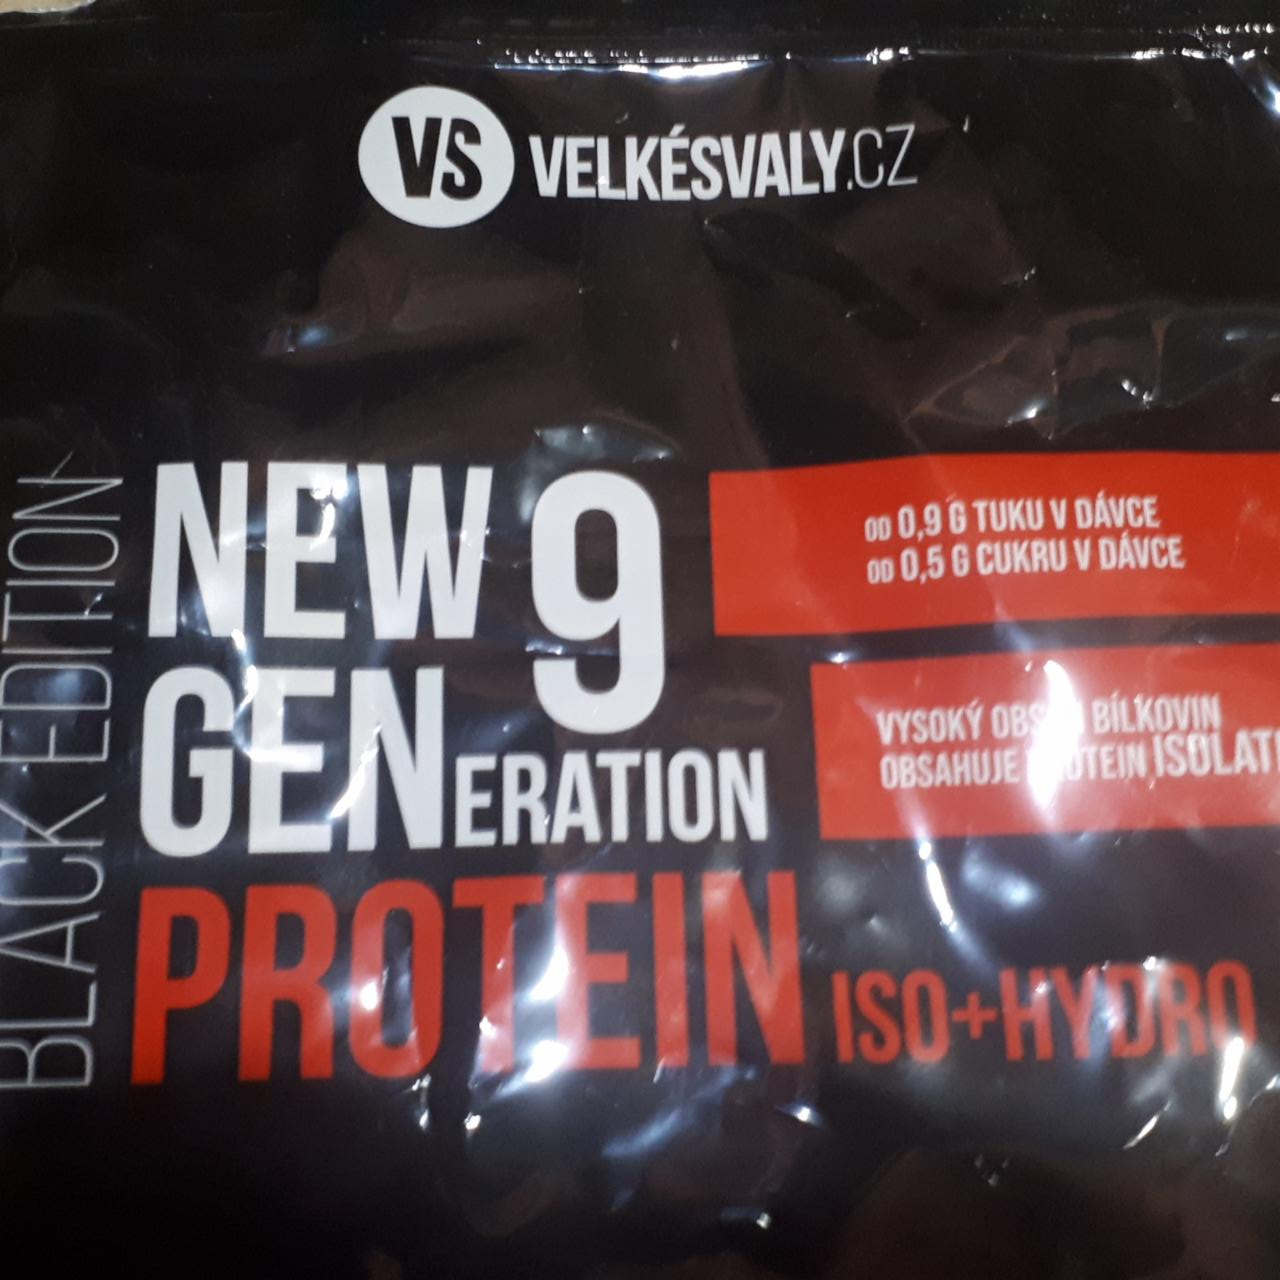 Fotografie - New 9 Generation Protein ISO+HYDRO Vanilka VelkéSvaly.cz